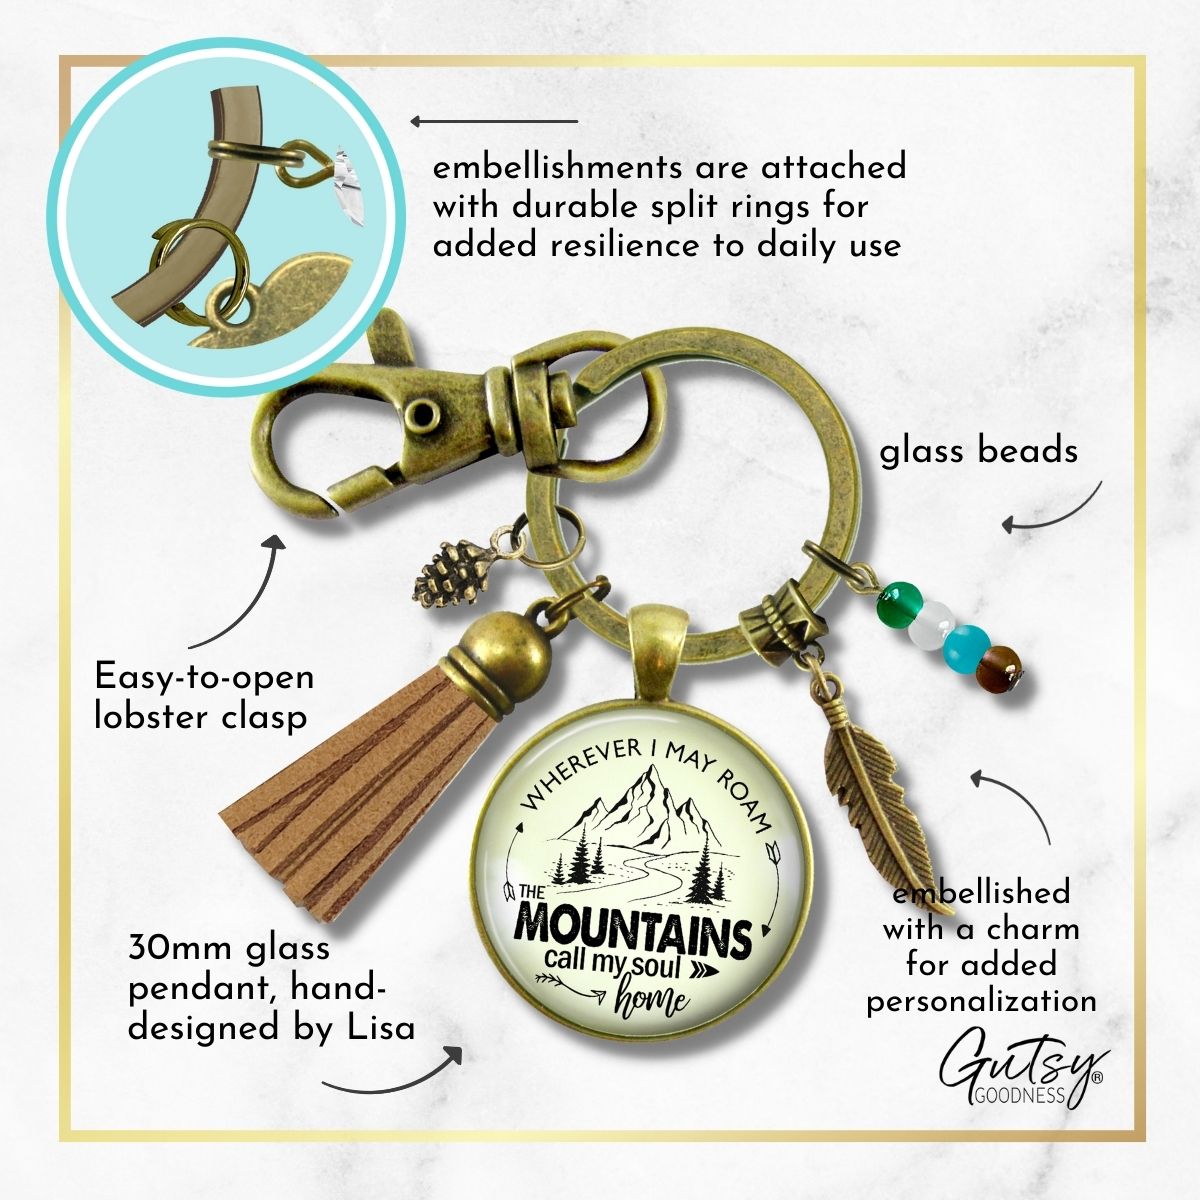 Handmade Gutsy Goodness Jewelry Wherever I Roam The Mountains Call My Soul Home Keychain Boho Jewelry Tassel Charm & Card